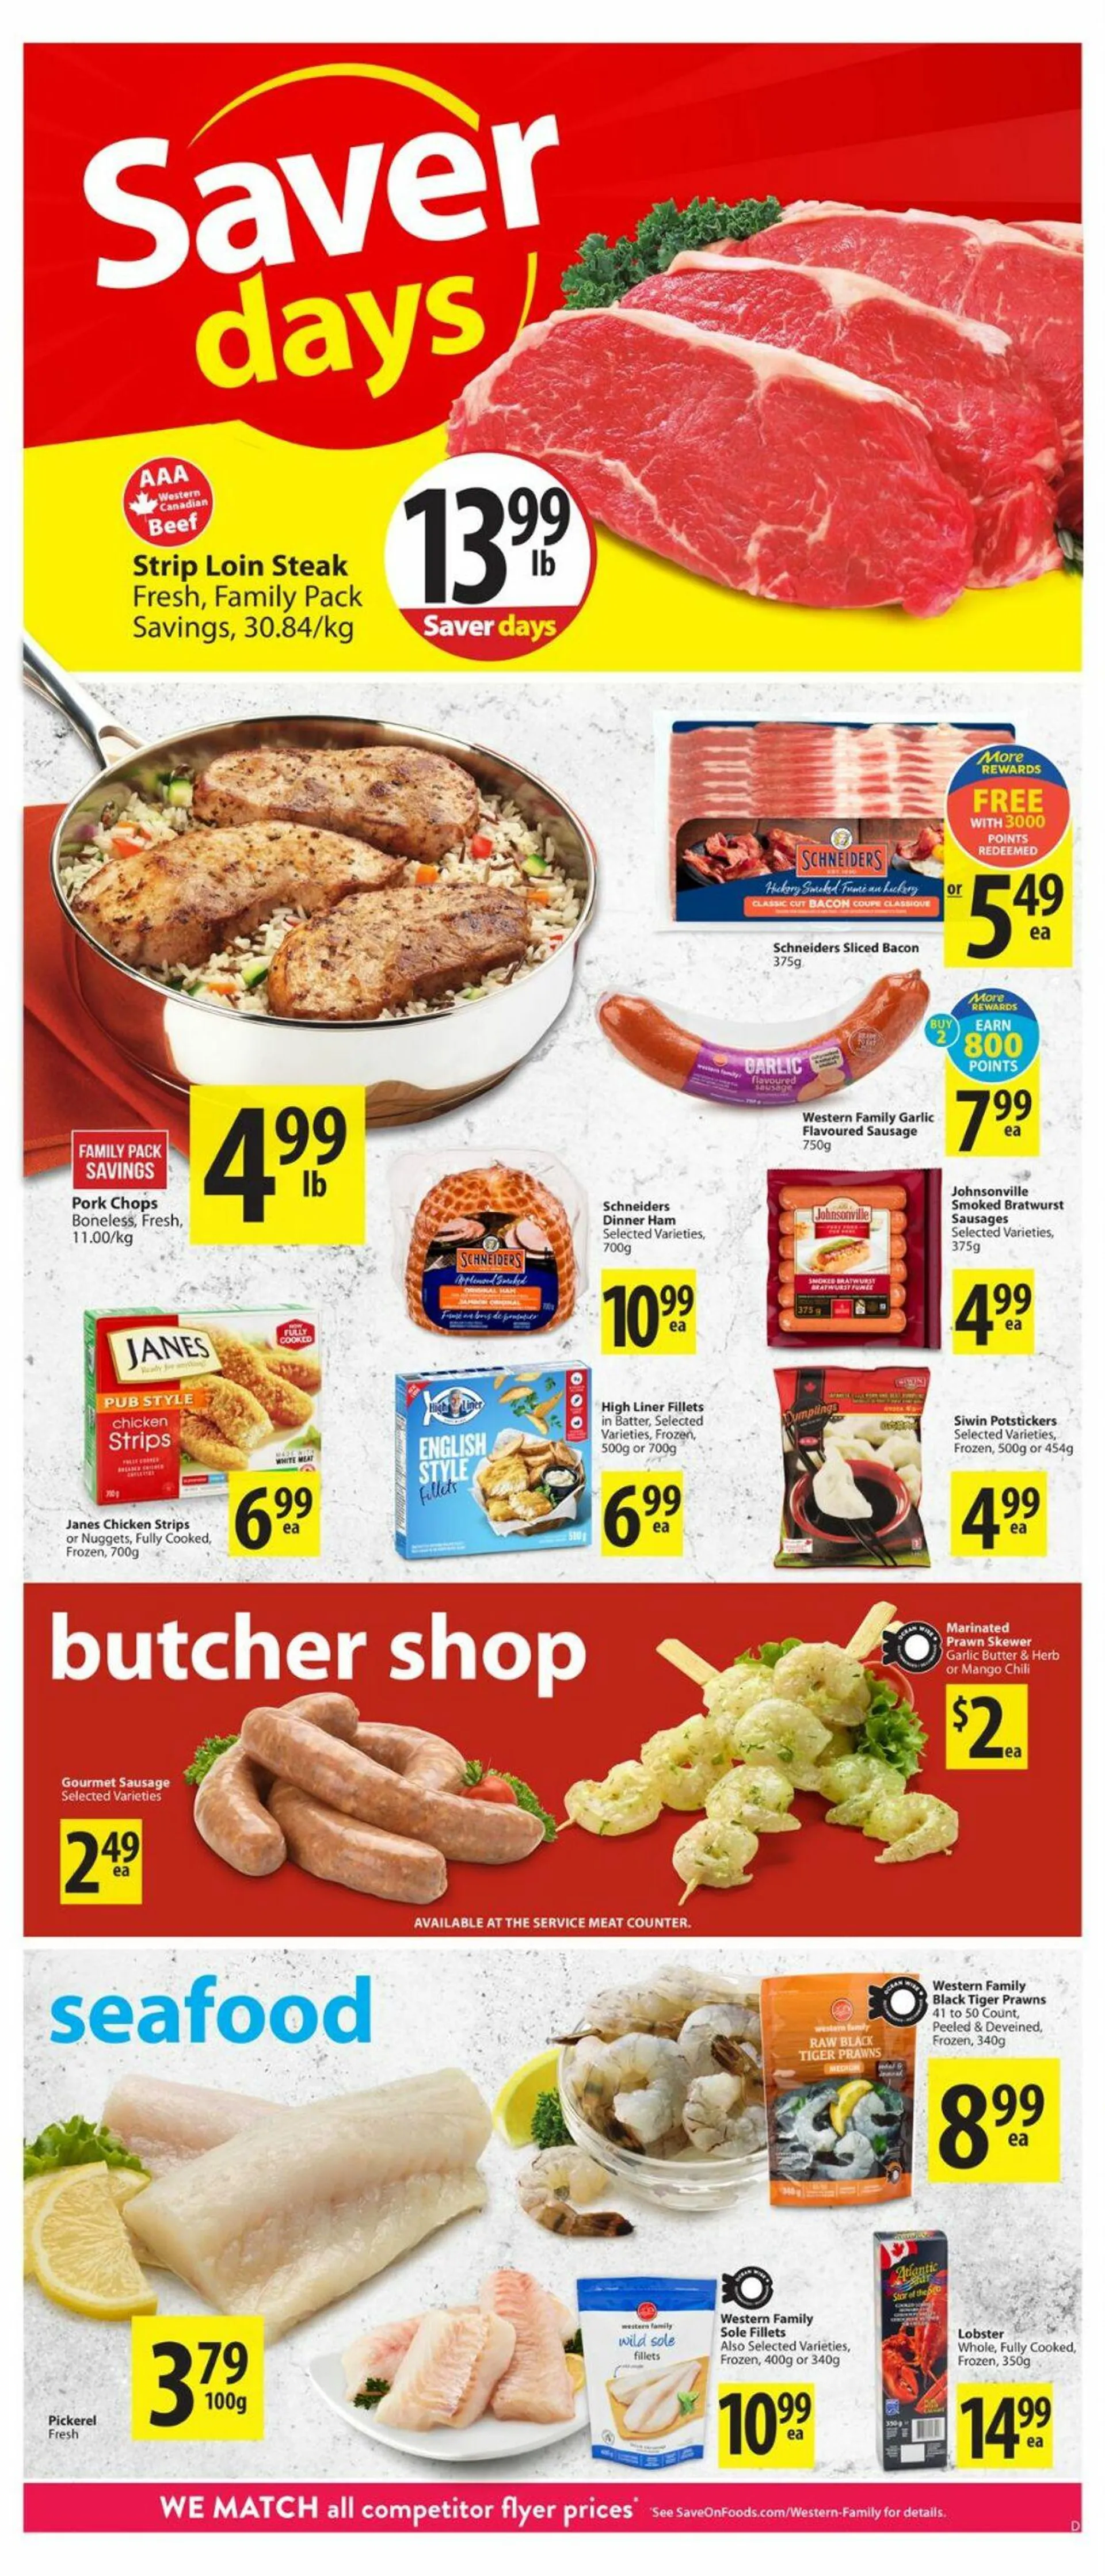 Save-On-Foods Current flyer - 4